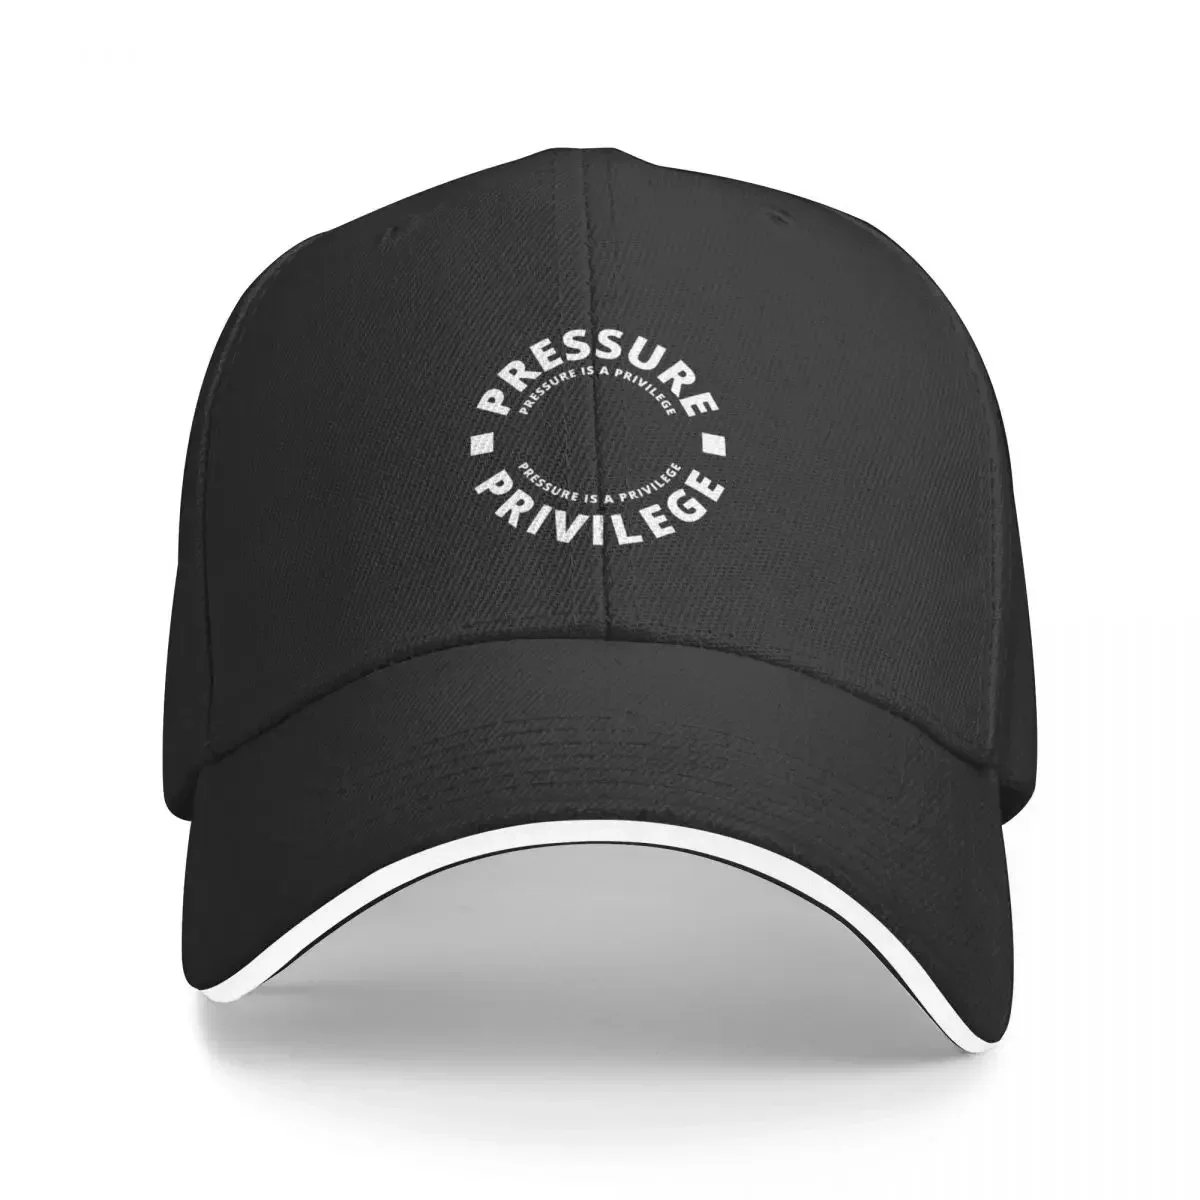 

Cbumpressure is a privilege ClassicCap Baseball Cap luxury man hat sun hat sun hats for women Men's